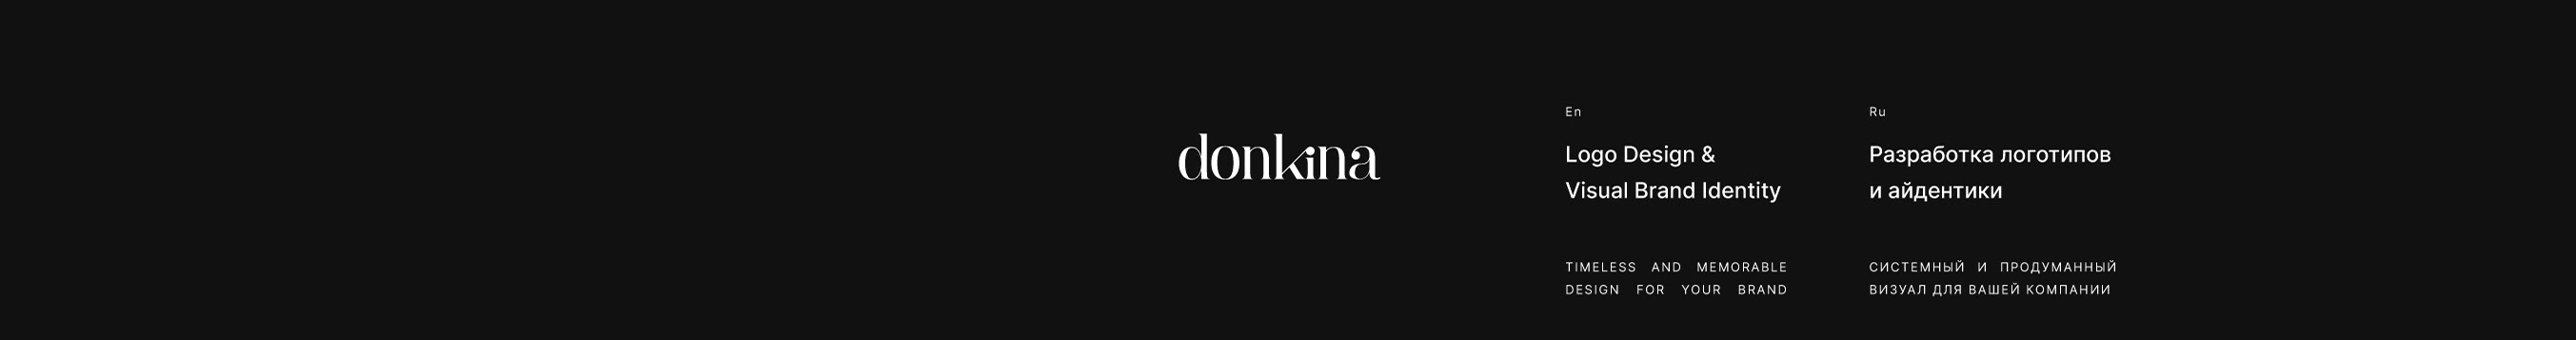 Banner de perfil de Olga Donkina